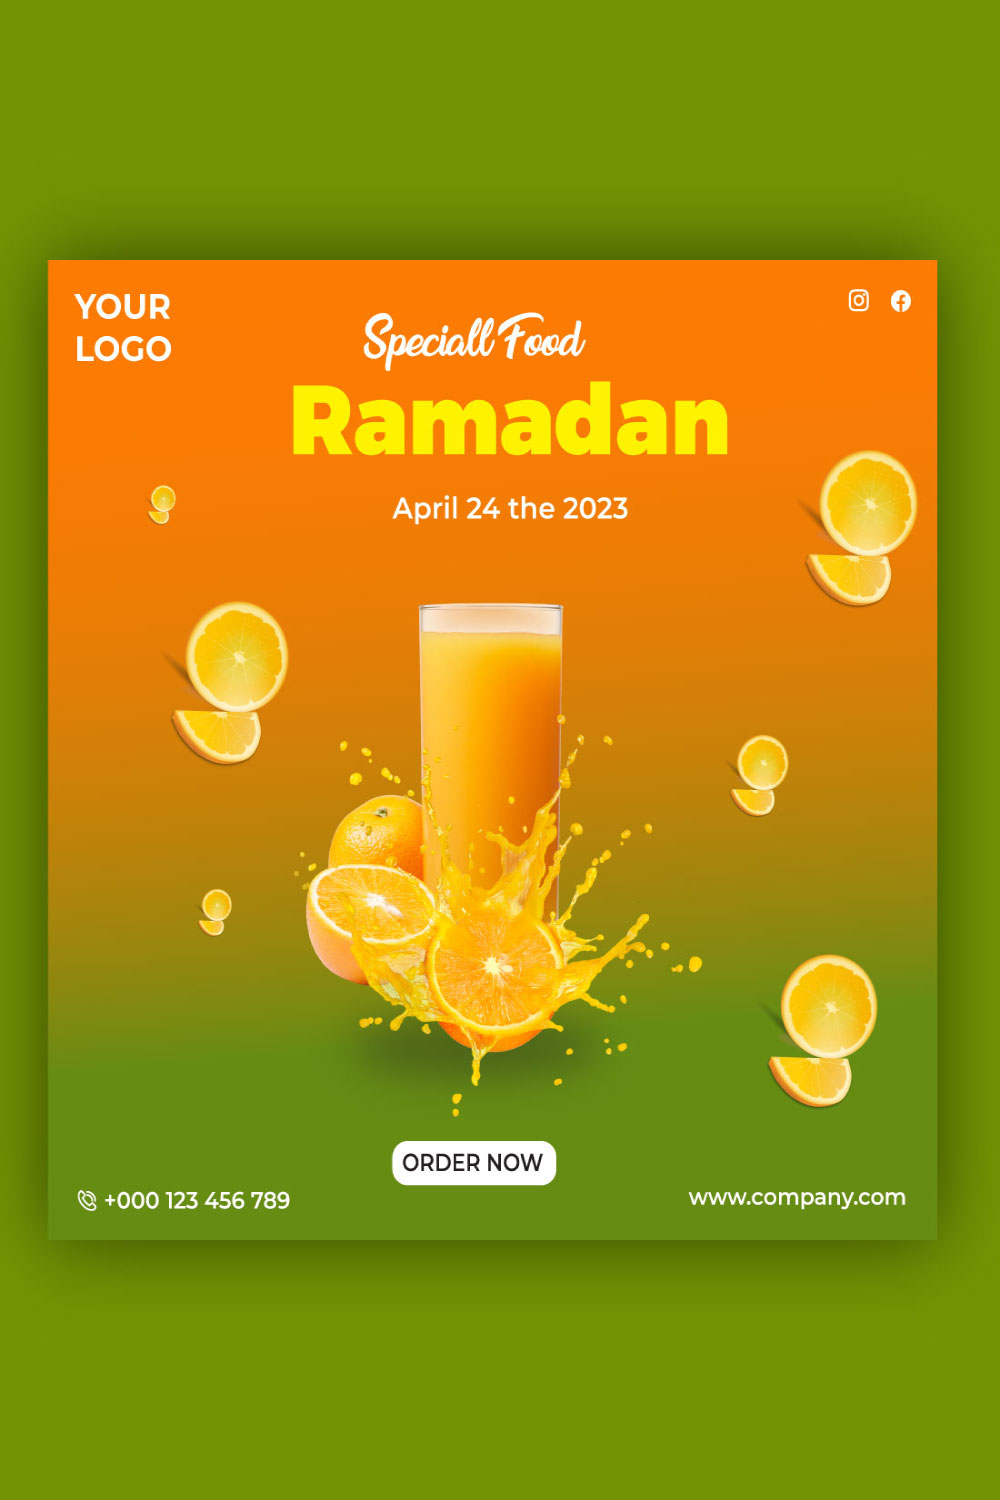 Ramadan Social Food Post Design Template pinterest preview image.